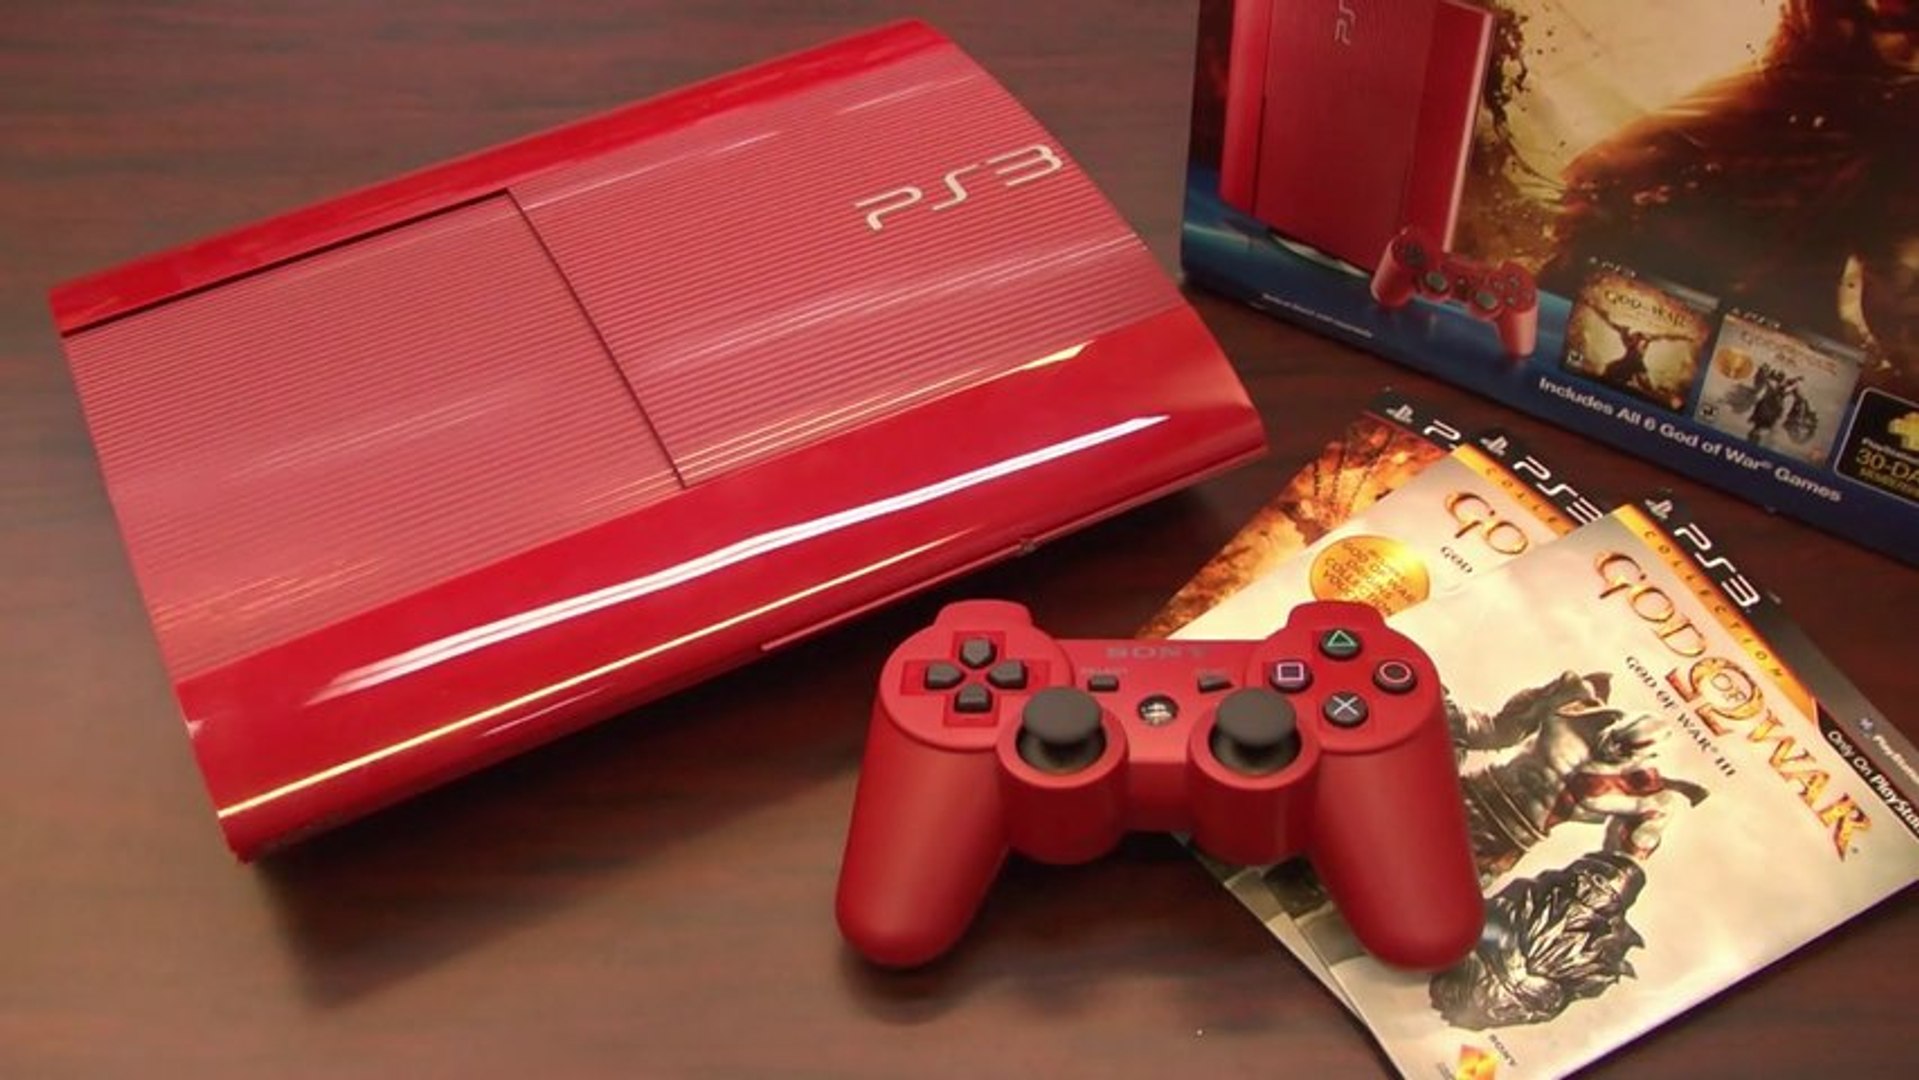 Новый пс3. Ps3 super Slim Red. Плейстейшен 3 красный. PS 3 красная ps3. Ps3 super Slim Red геймпад.